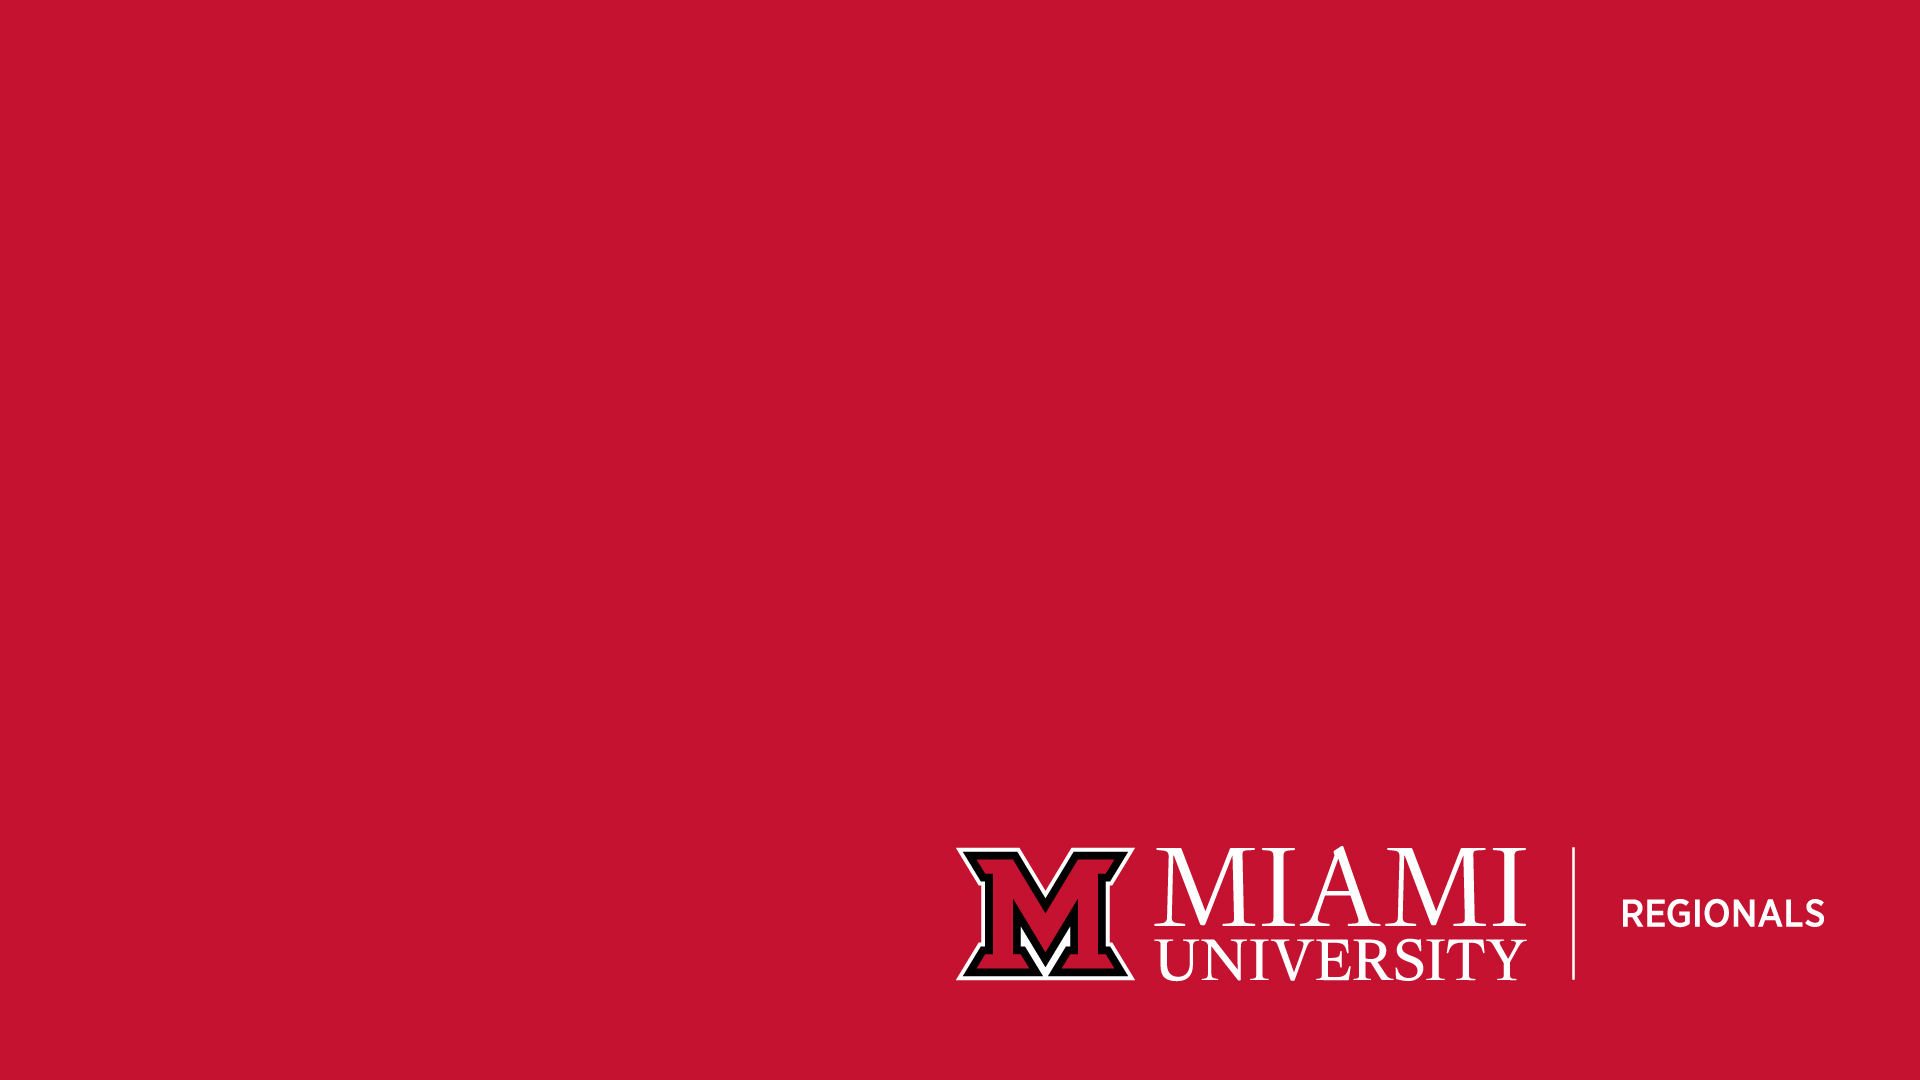 Red background with Miami University Regionals Logo